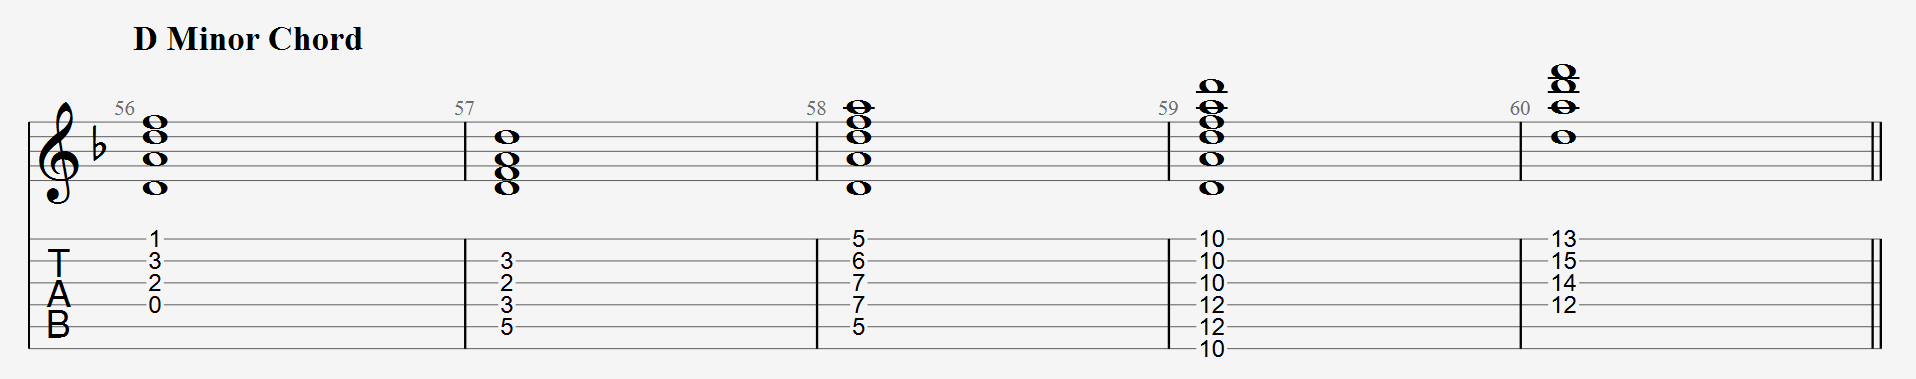 D minor chord shapes